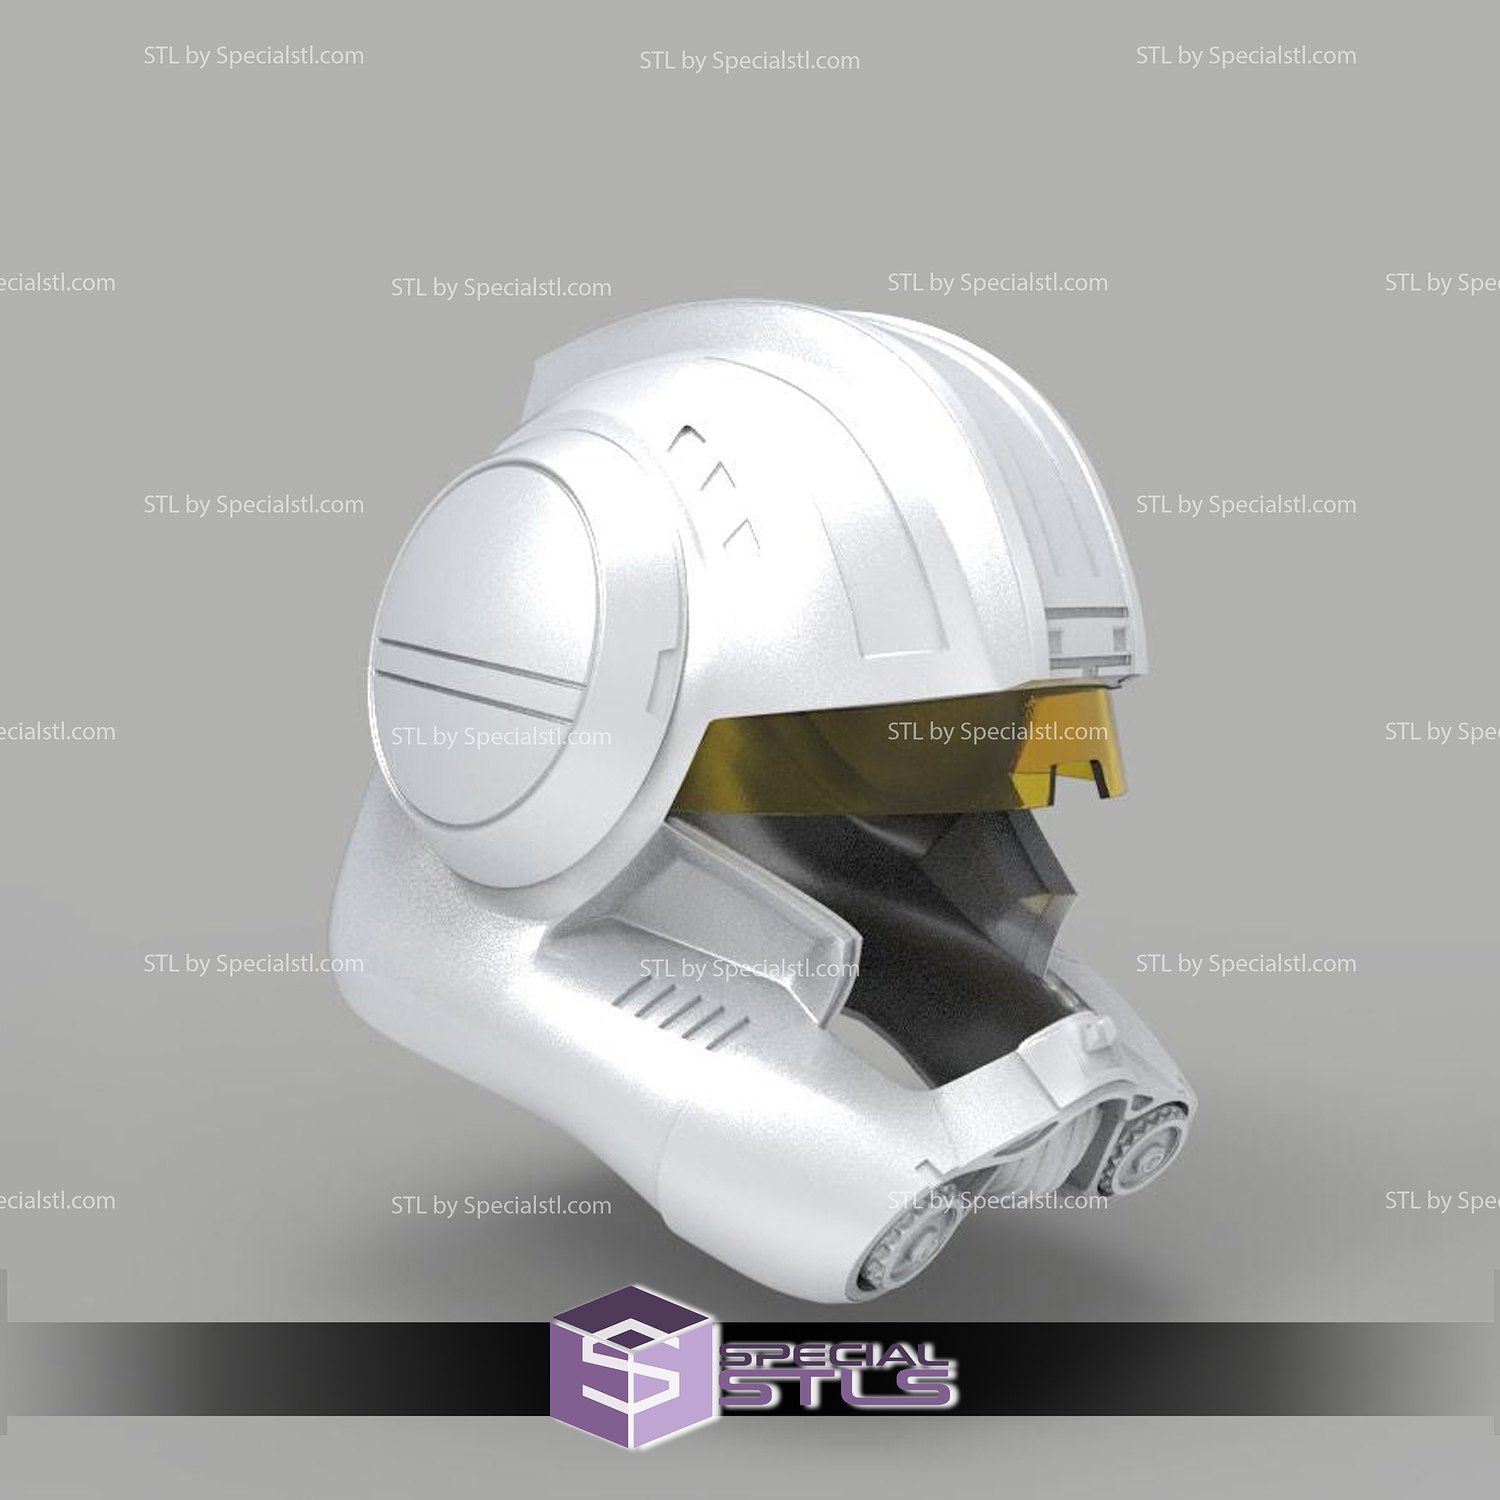 Cosplay STL Files ARC170 Pilot Helmet Starwars 3D Print Wearable